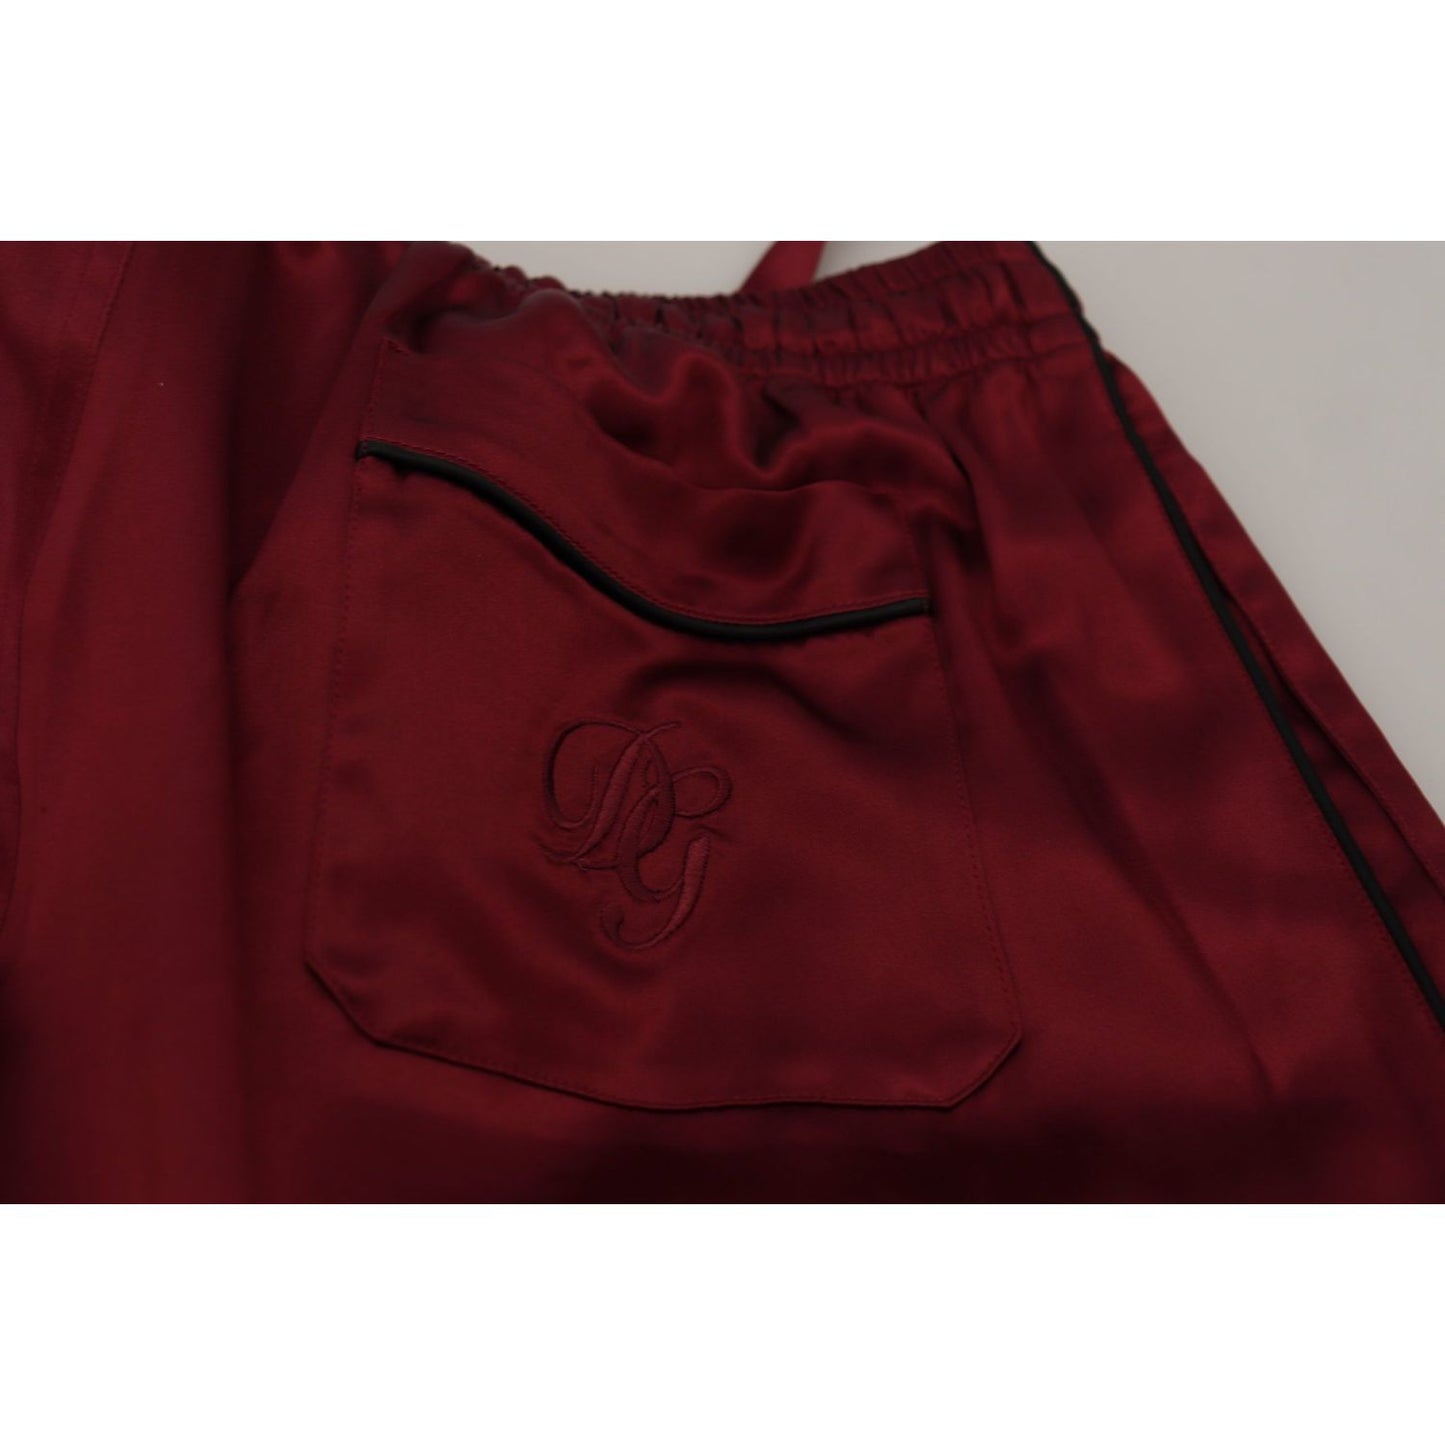 Dolce & Gabbana Silk Lounge Pants in Bordeaux bordeaux-silk-dg-sleep-lounge-pants Jeans & Pants IMG_7186-1-scaled-e6091502-375.jpg